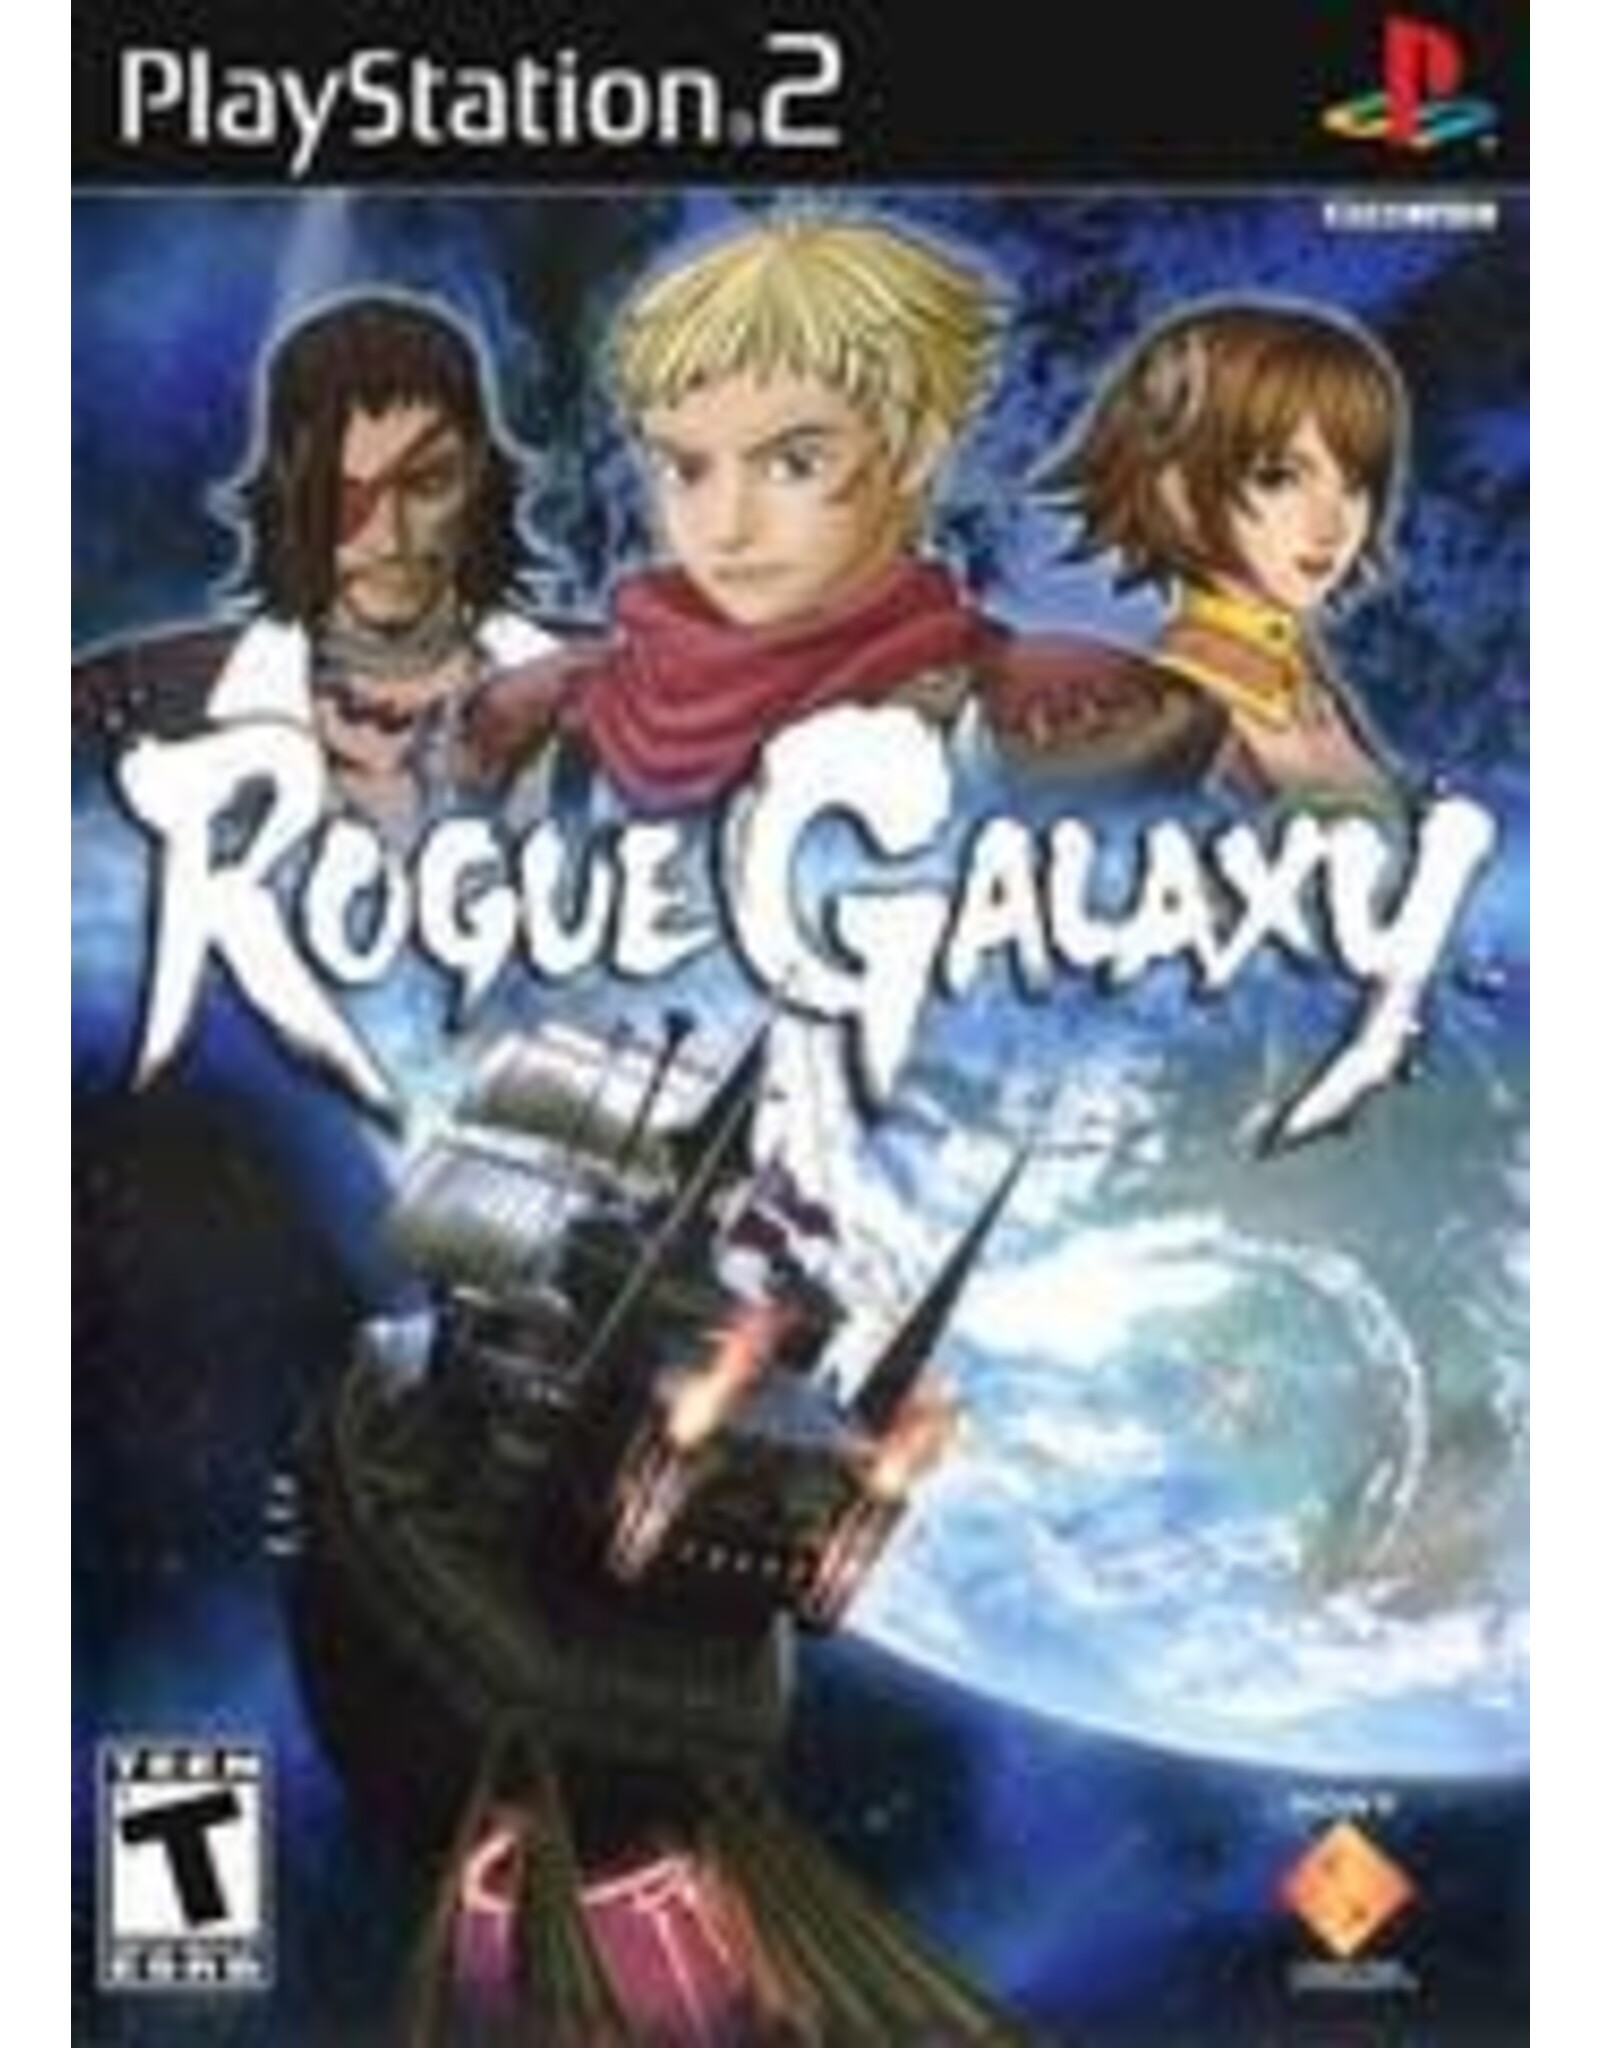 Playstation 2 Rogue Galaxy (Used, Cosmetic Damage)